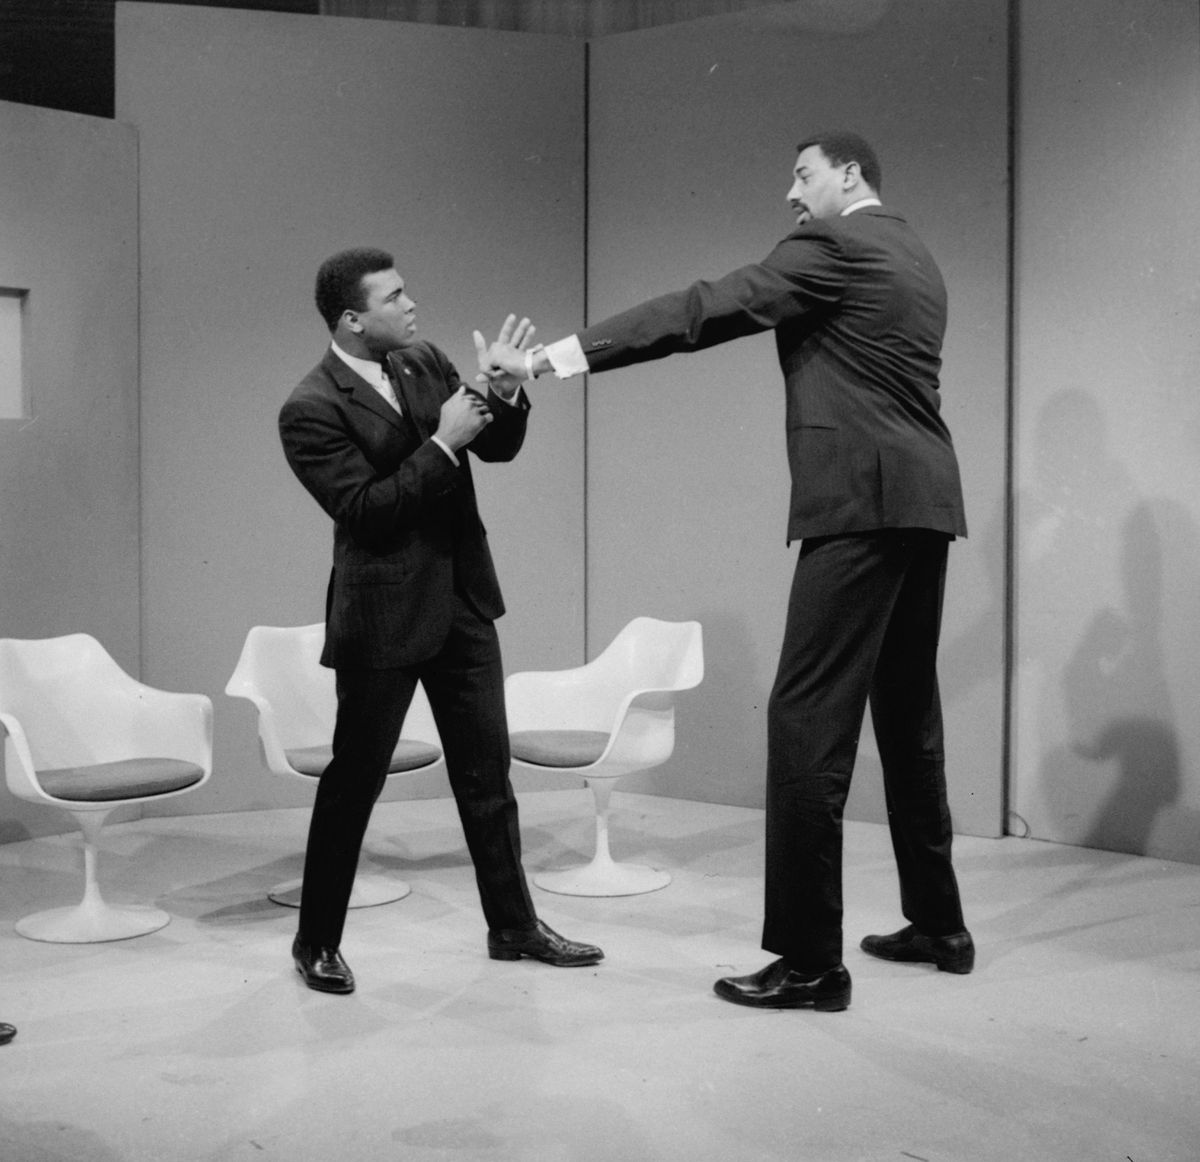 Wilt Chamberlain demonstrates his reach to Muhammad Ali – 1967